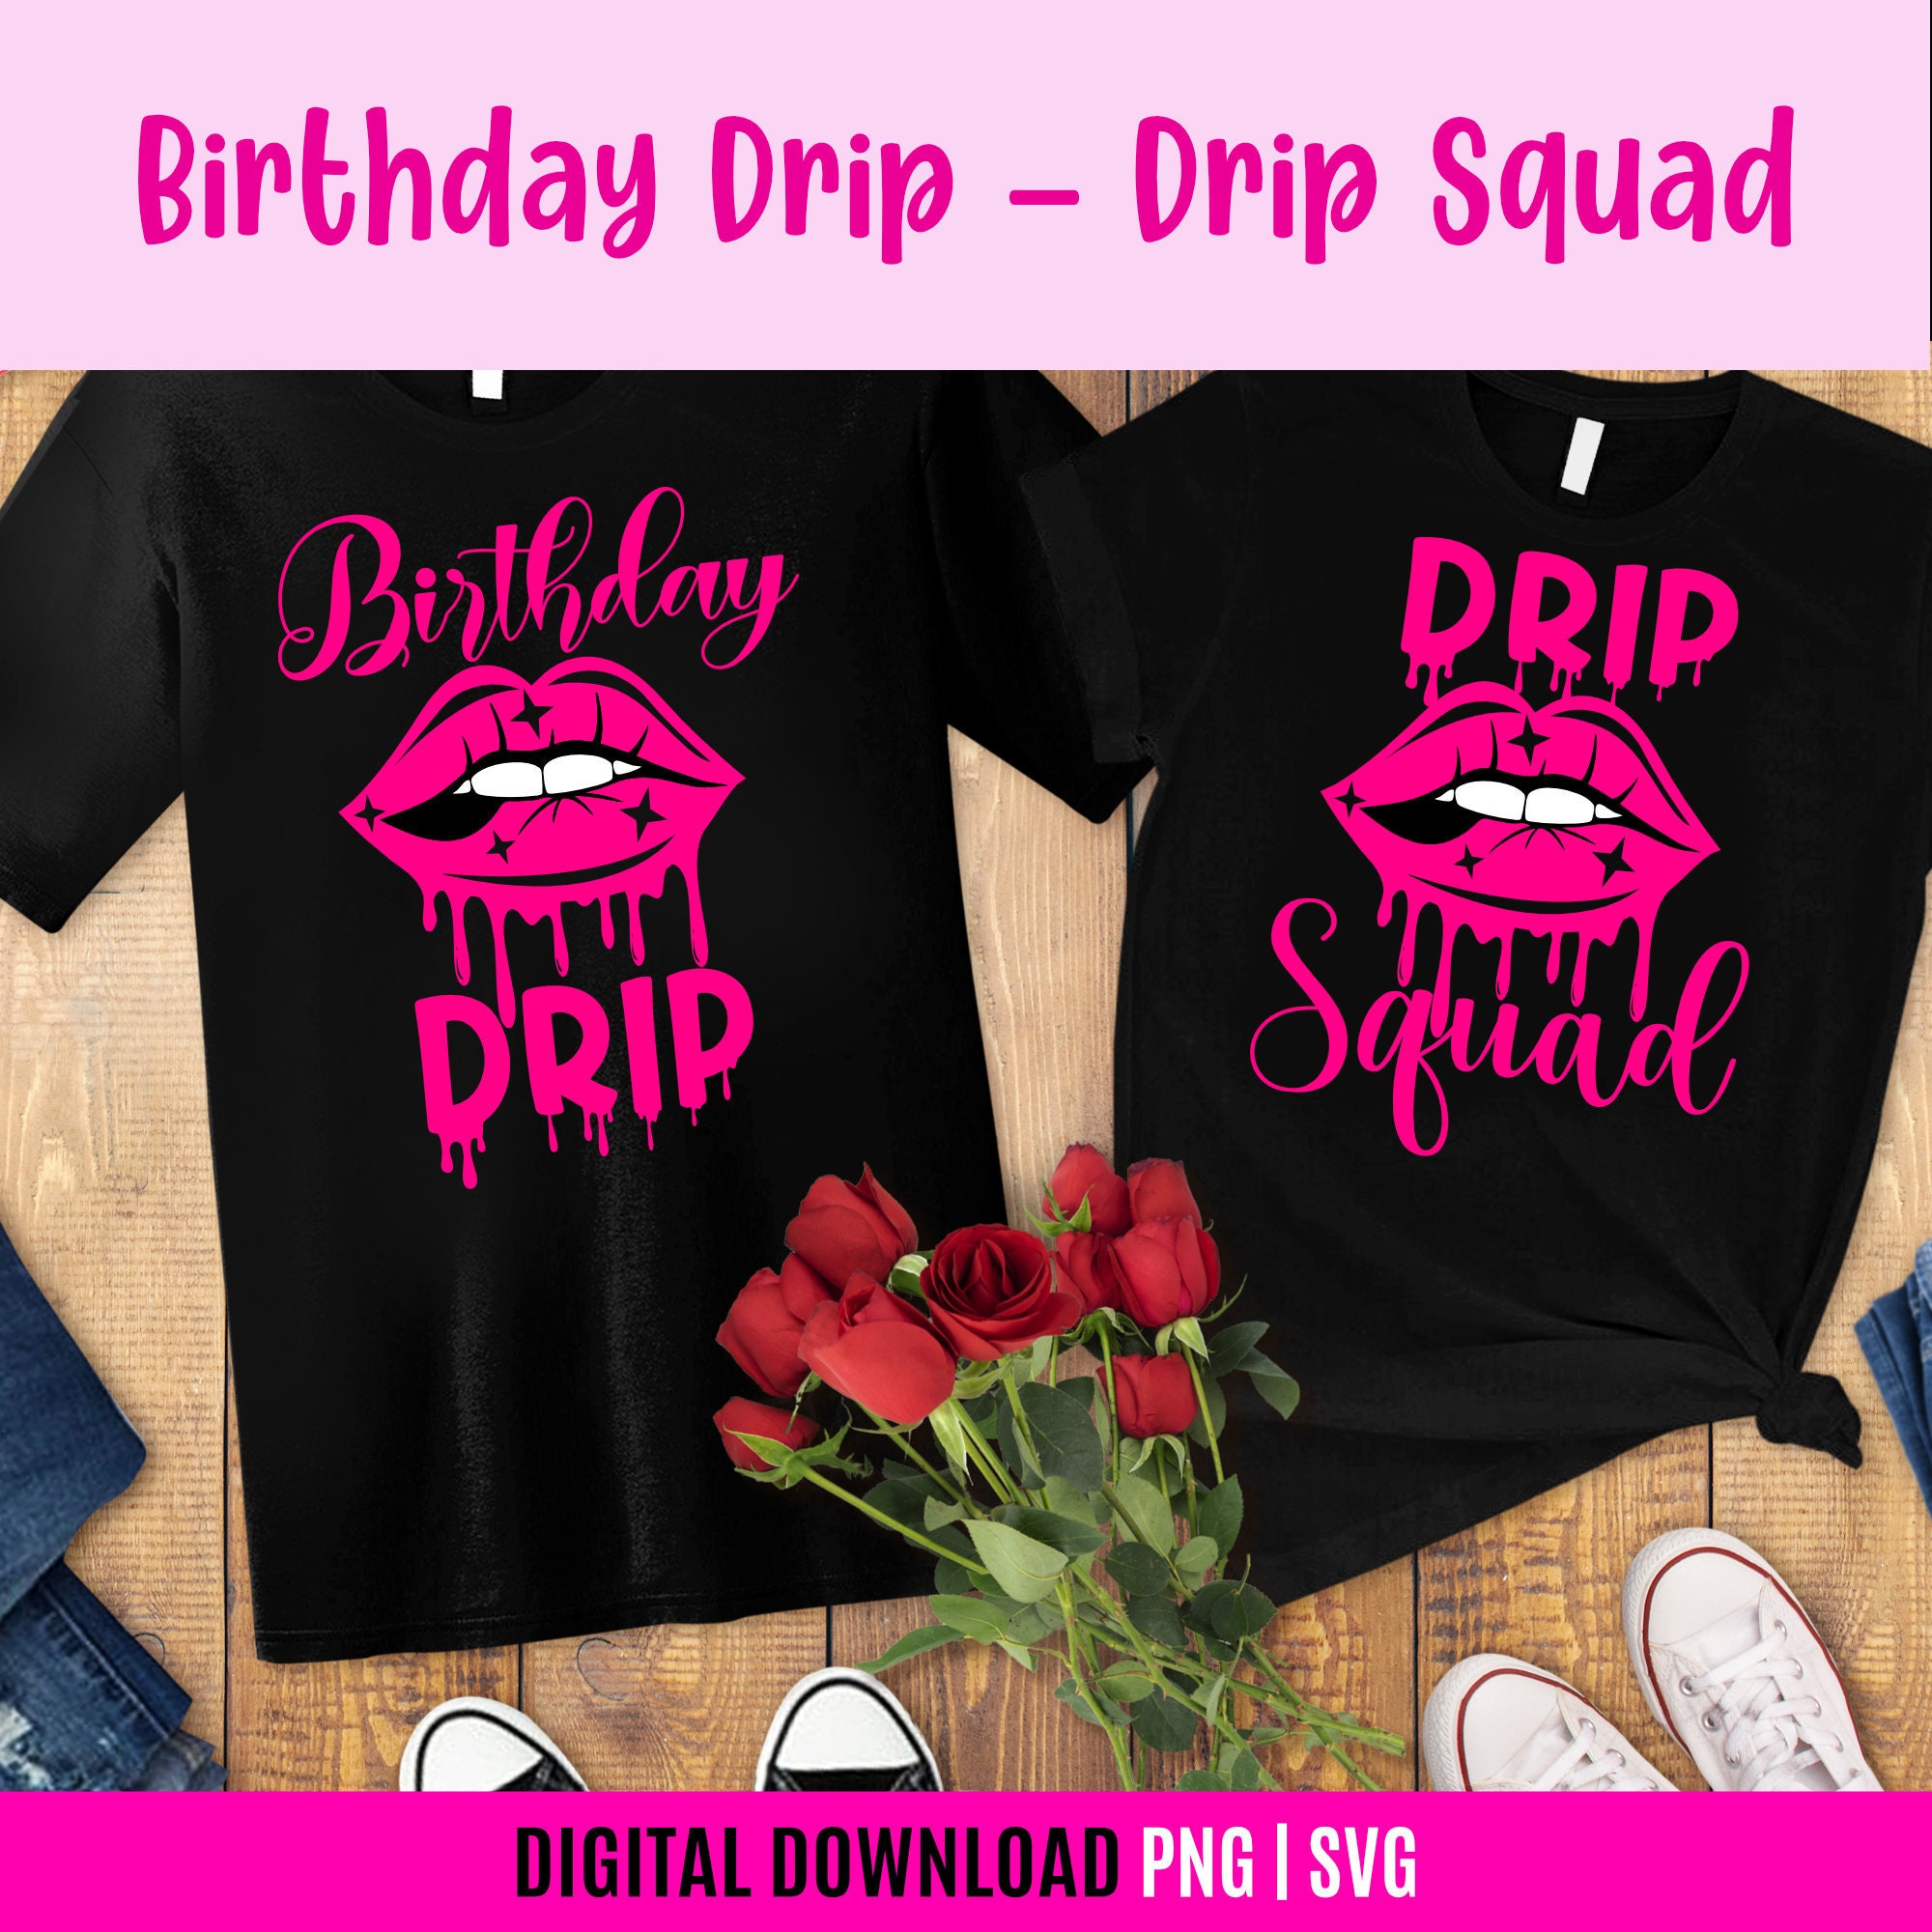 Birthday Squad Svg, Birthday Drip Svg, Birthday Drip, Birthday Drip and  Drip Squad, SVG and Png-digtal File ONLY, the Original Designer -   Canada